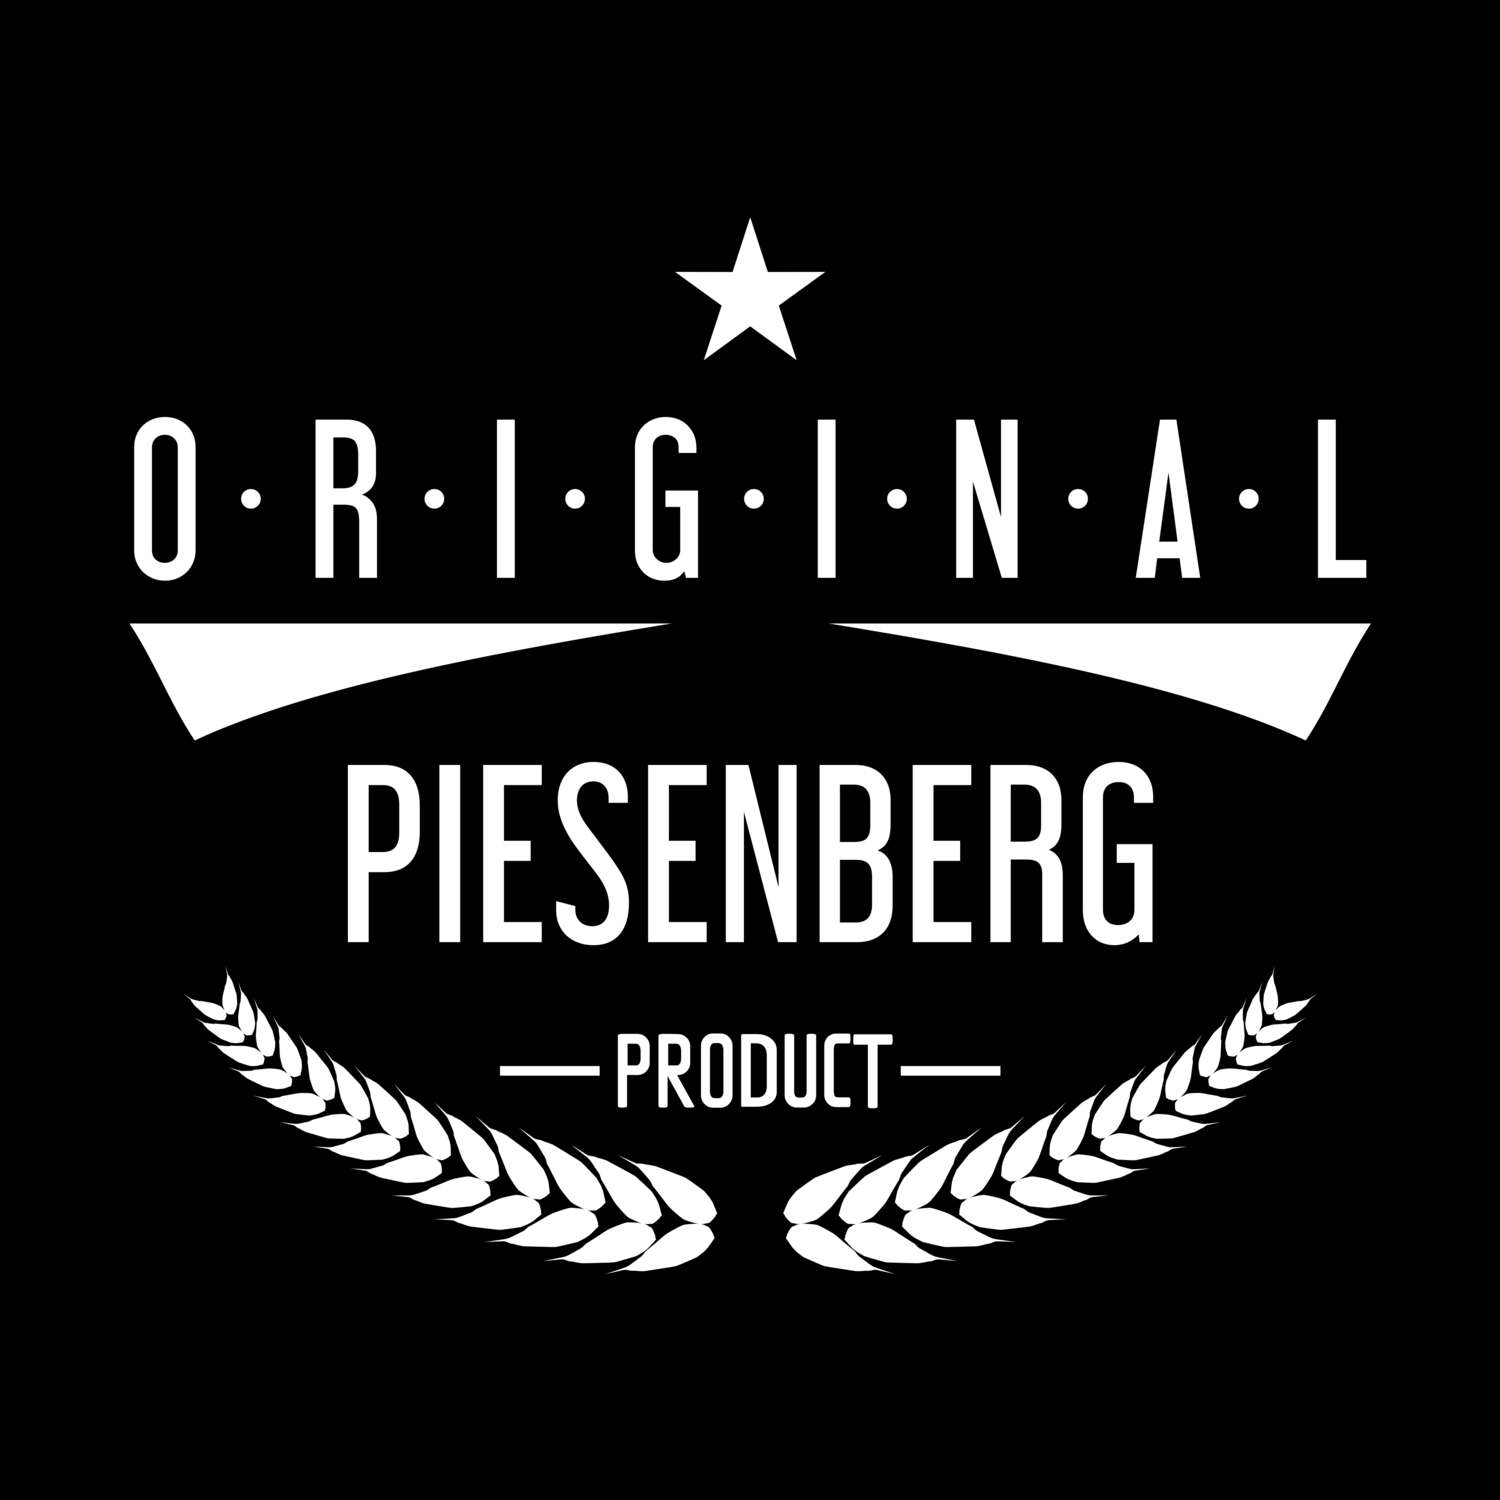 Piesenberg T-Shirt »Original Product«